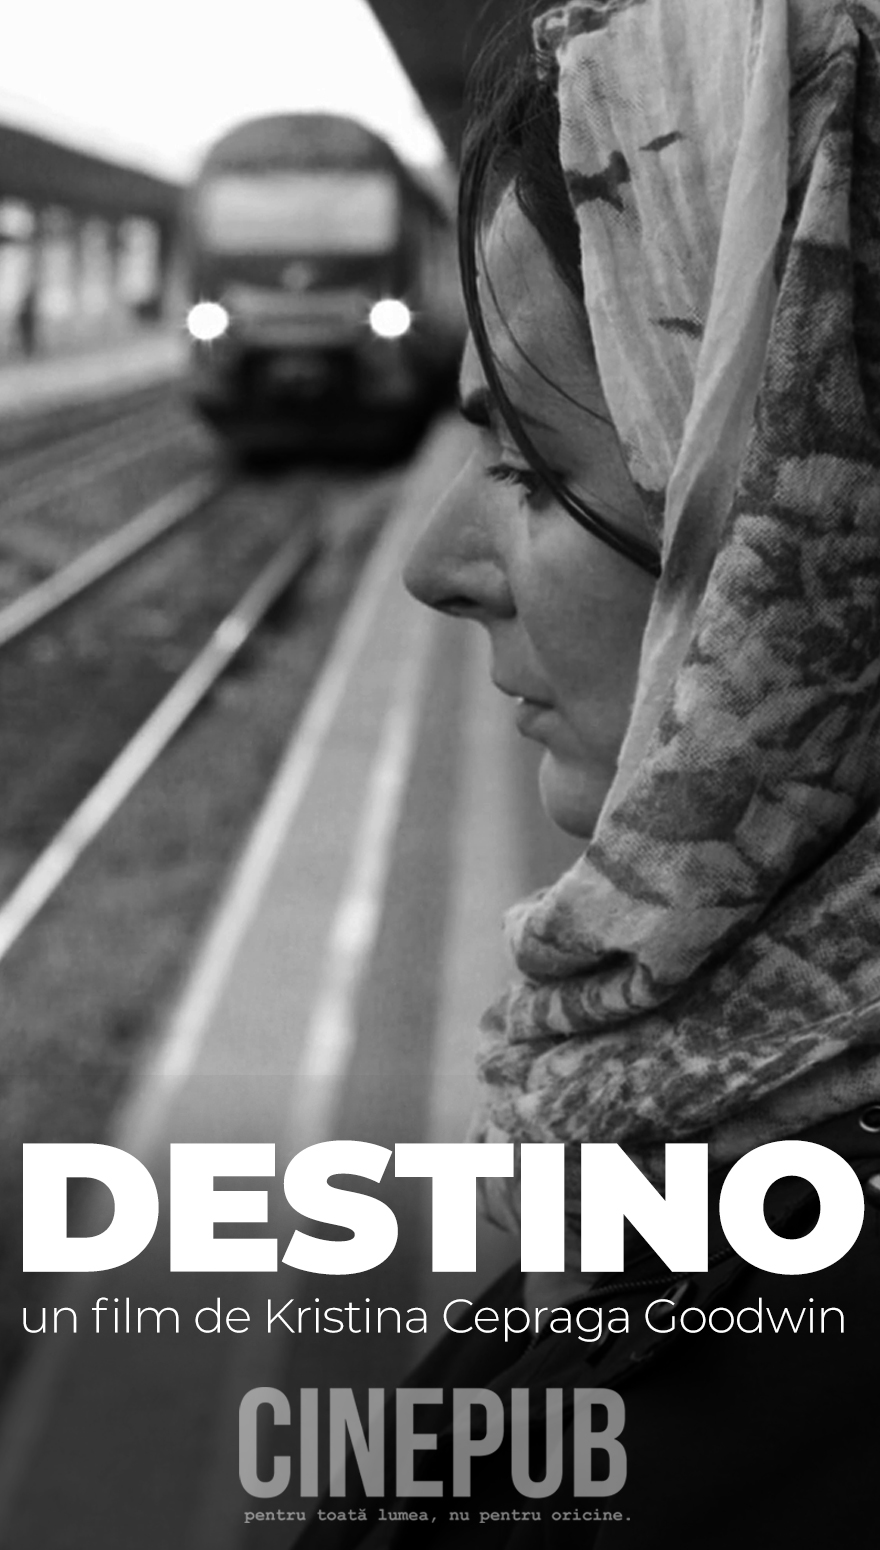 Destino - short film by Kristina Cepraga, online on CINEPUB